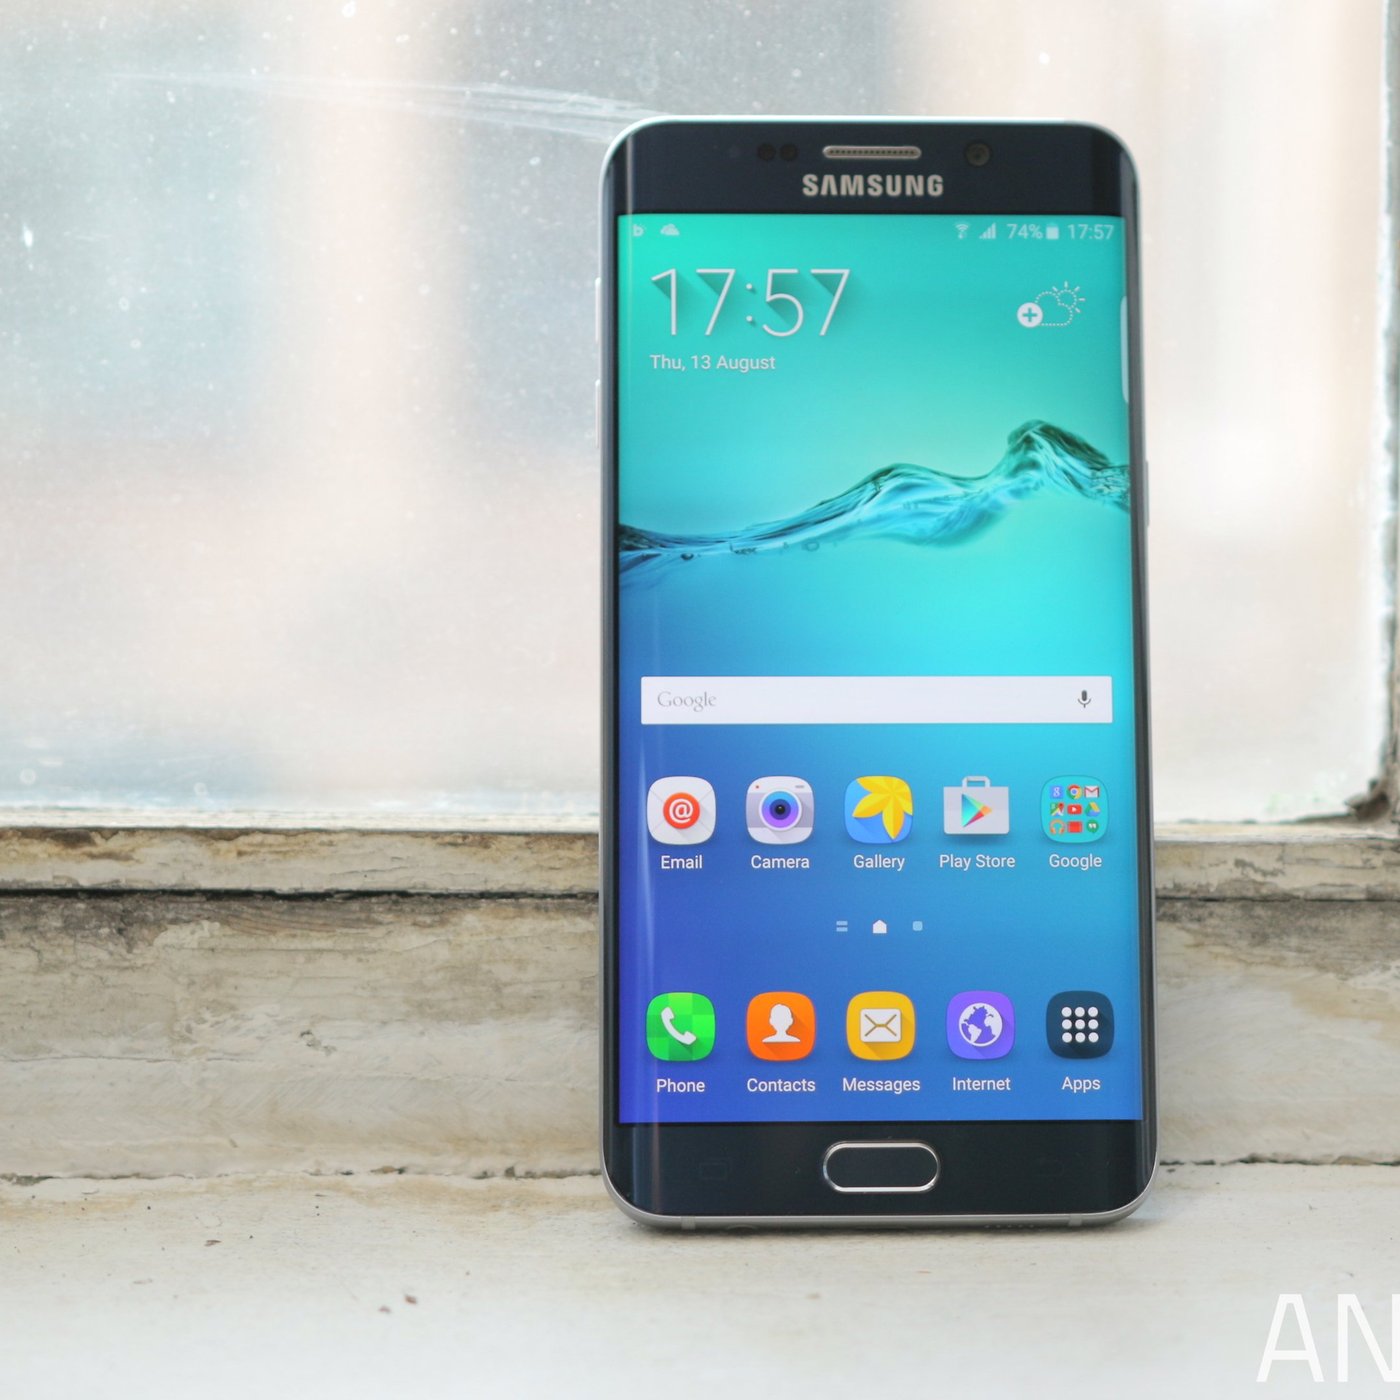 Floreren zwaartekracht Correspondent Samsung Galaxy S6 Edge+ review: cutting edge | NextPit